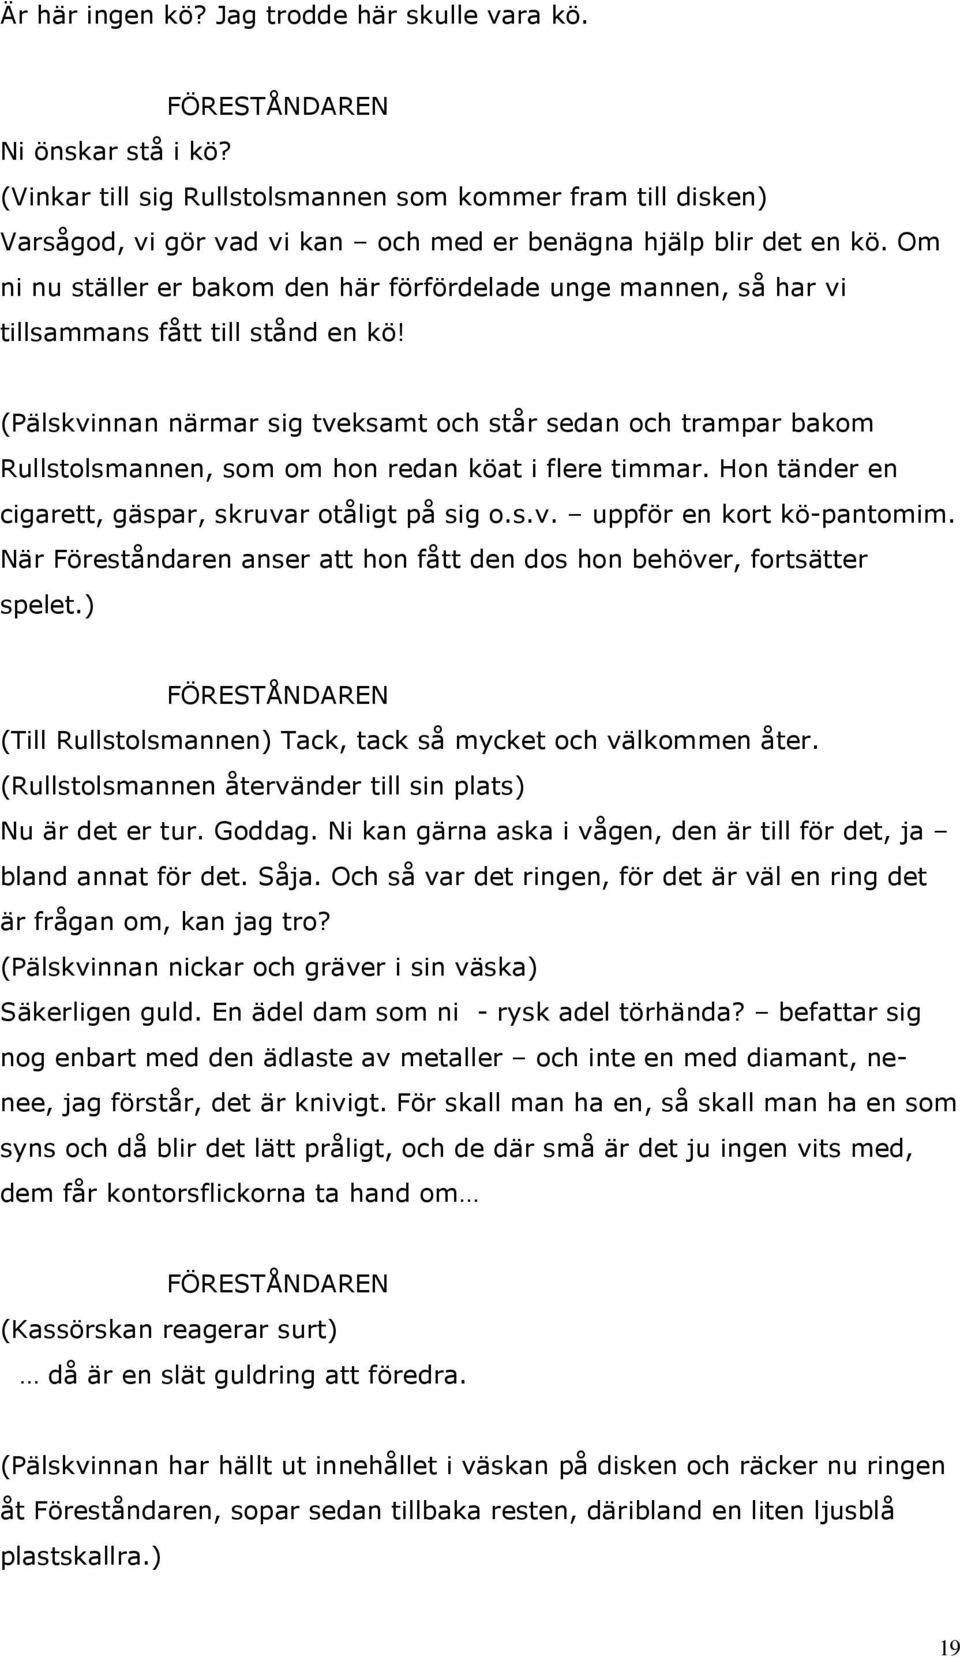 PANTLÅNEKONTORET. av Susanne Ringell - PDF Free Download